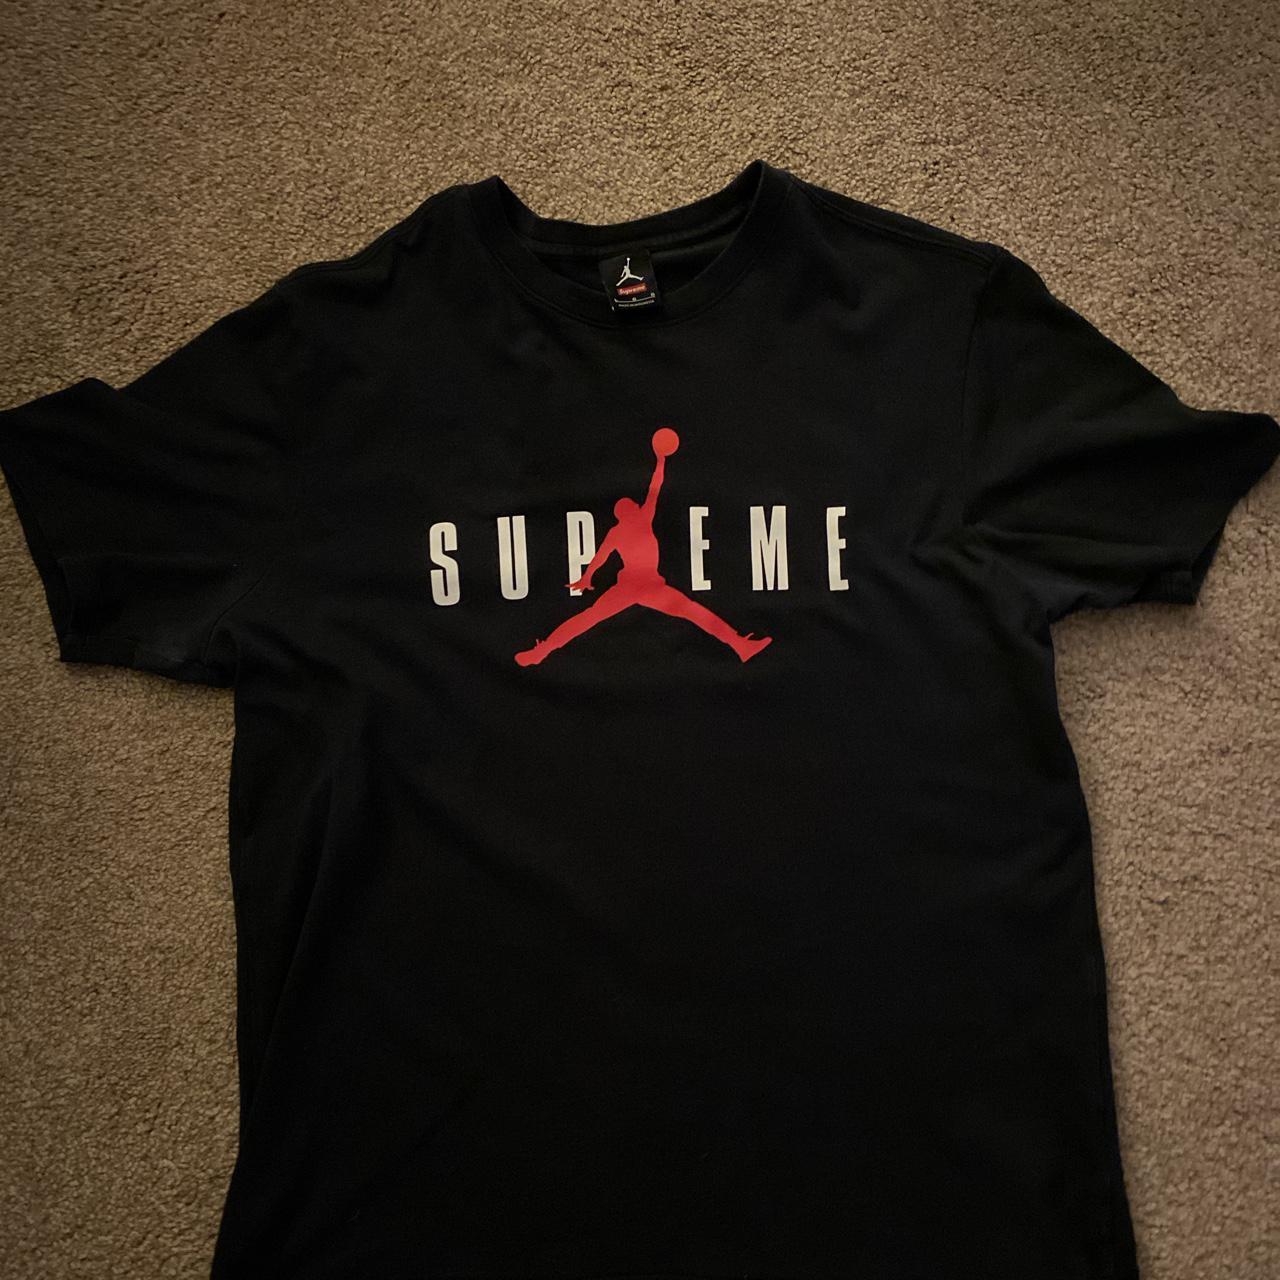 Genuine Supreme x Jordan t shirt , Size L , Perfect